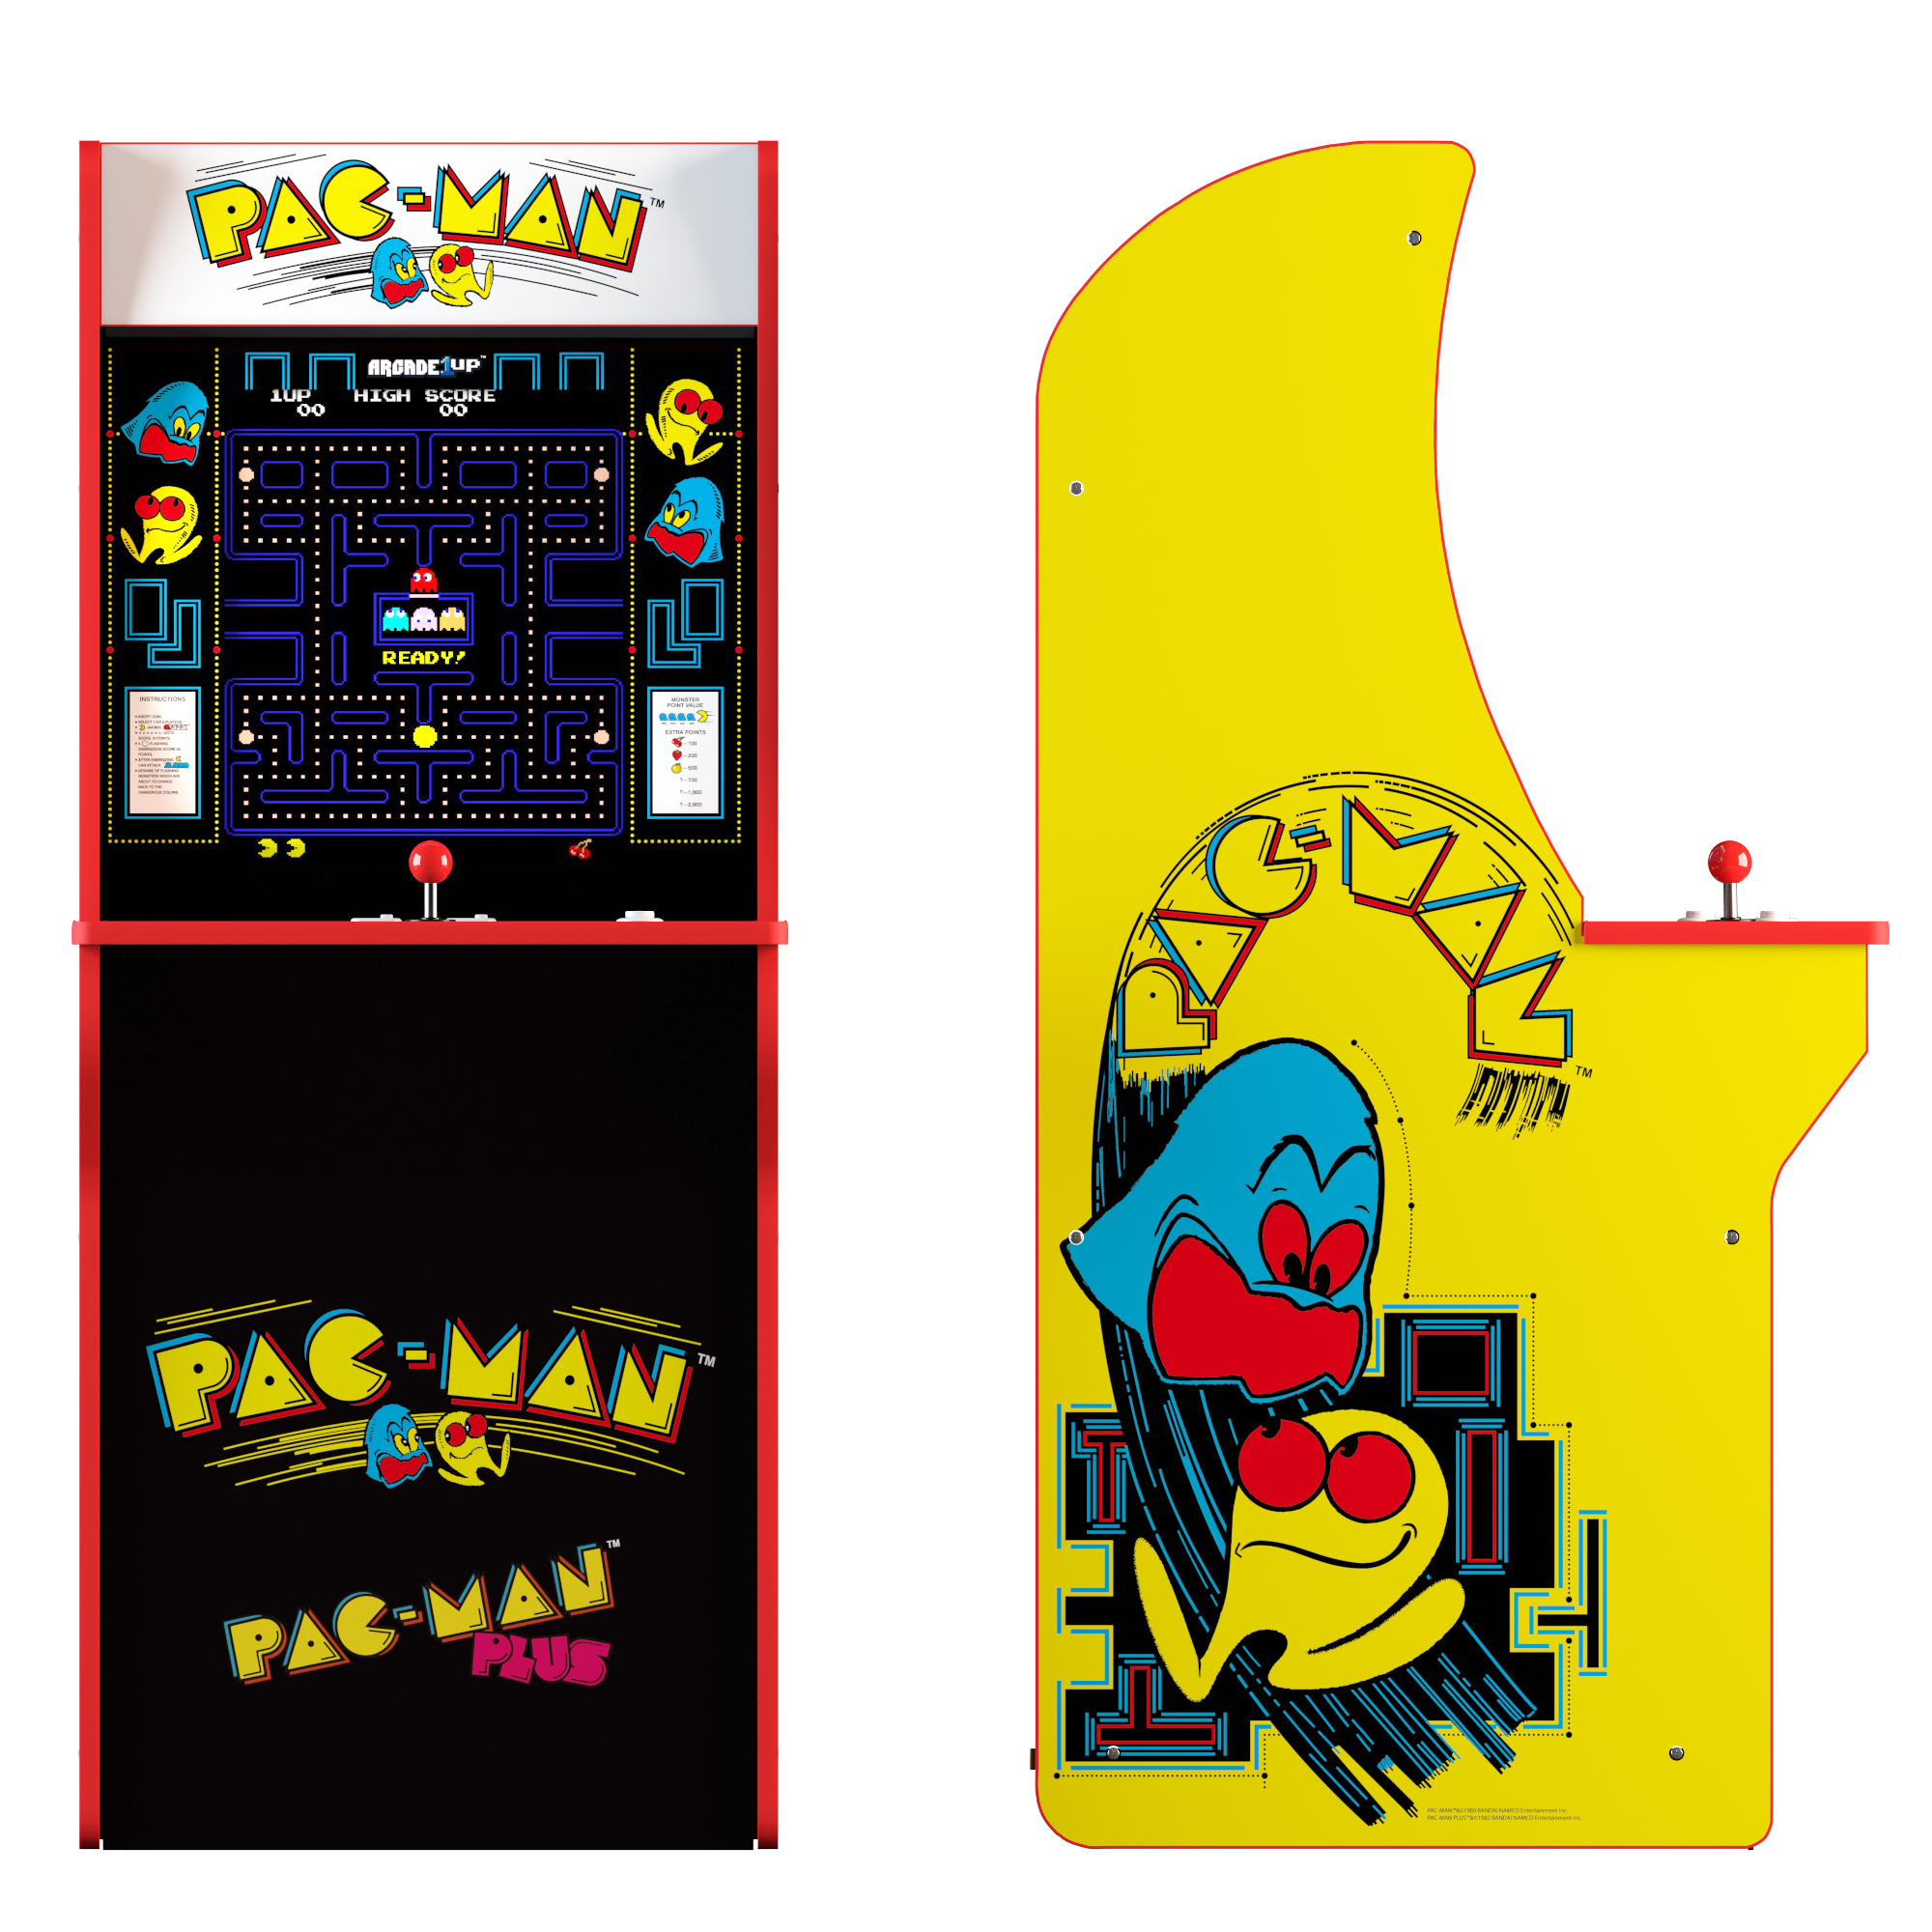 Pac-Man Arcade Machine with Riser, Arcade1UP - image 5 of 8